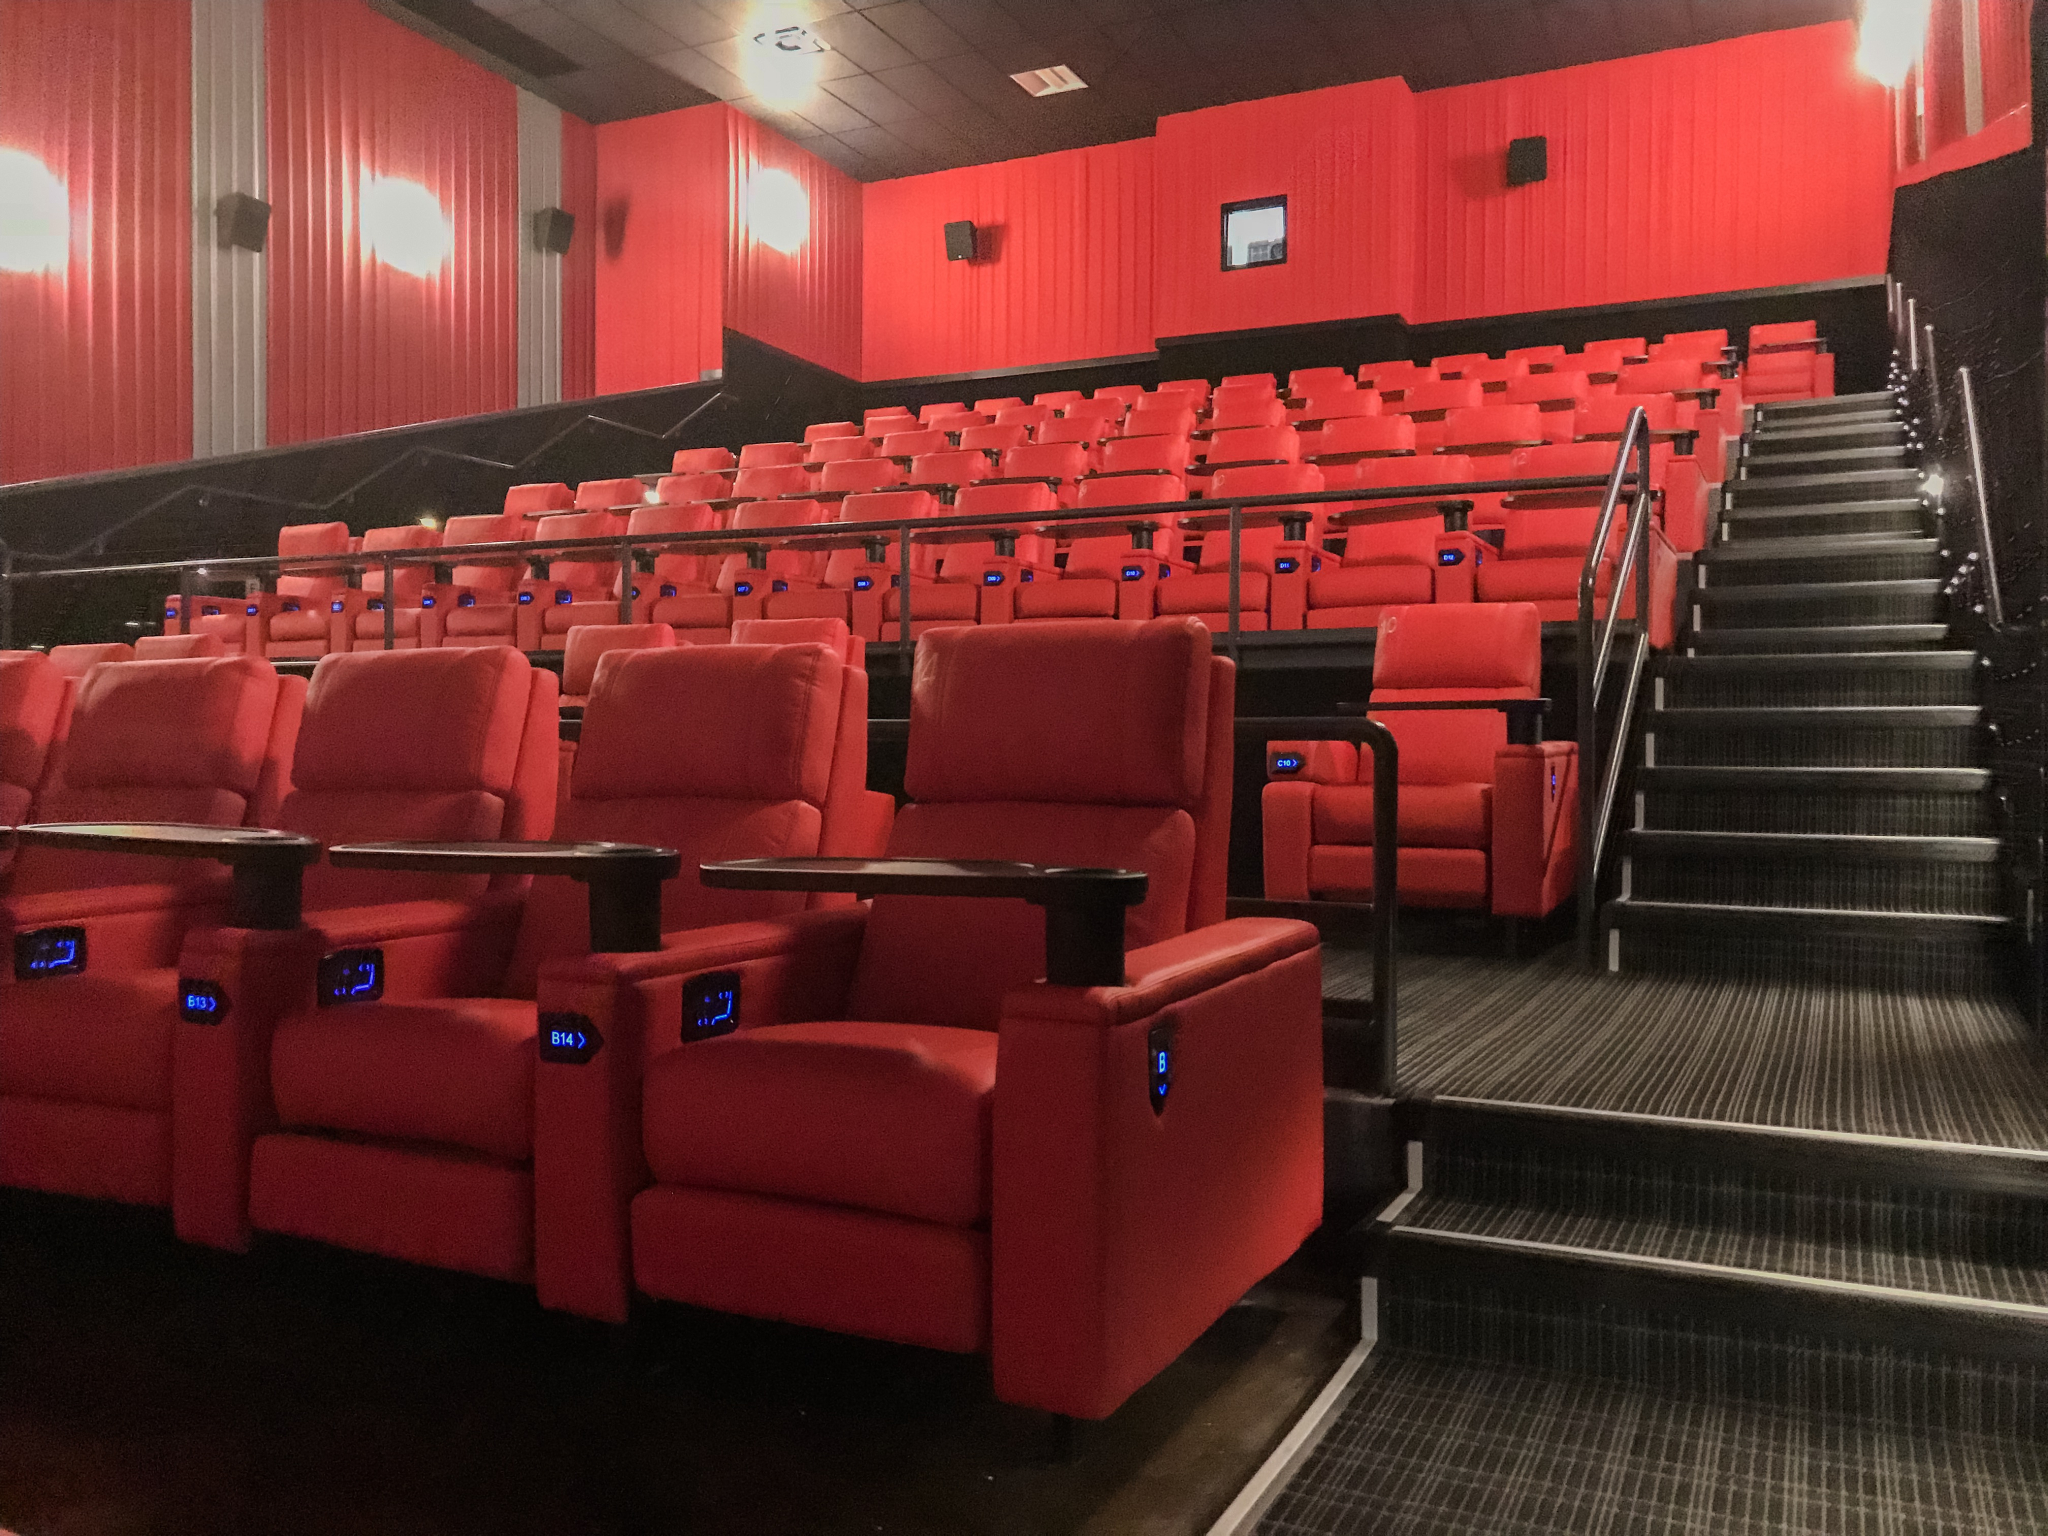 Birmingham, Alabama, Pell City Premiere Lux Cine, movie theater, reclining seats